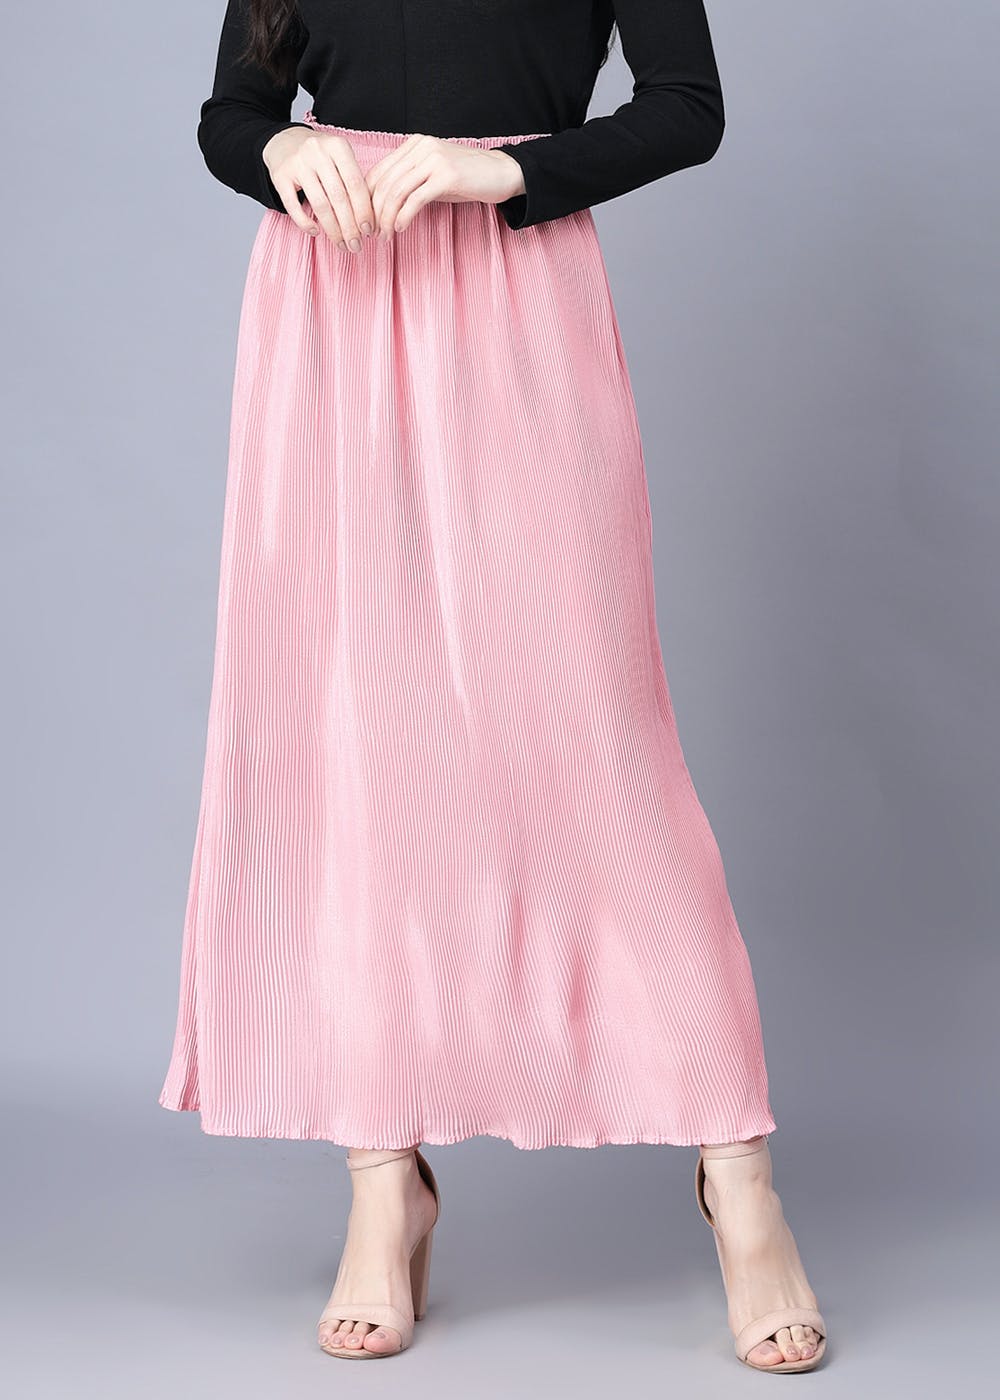 Get Chiffon Solid Pink Women Skirt at ₹ 825 | LBB Shop